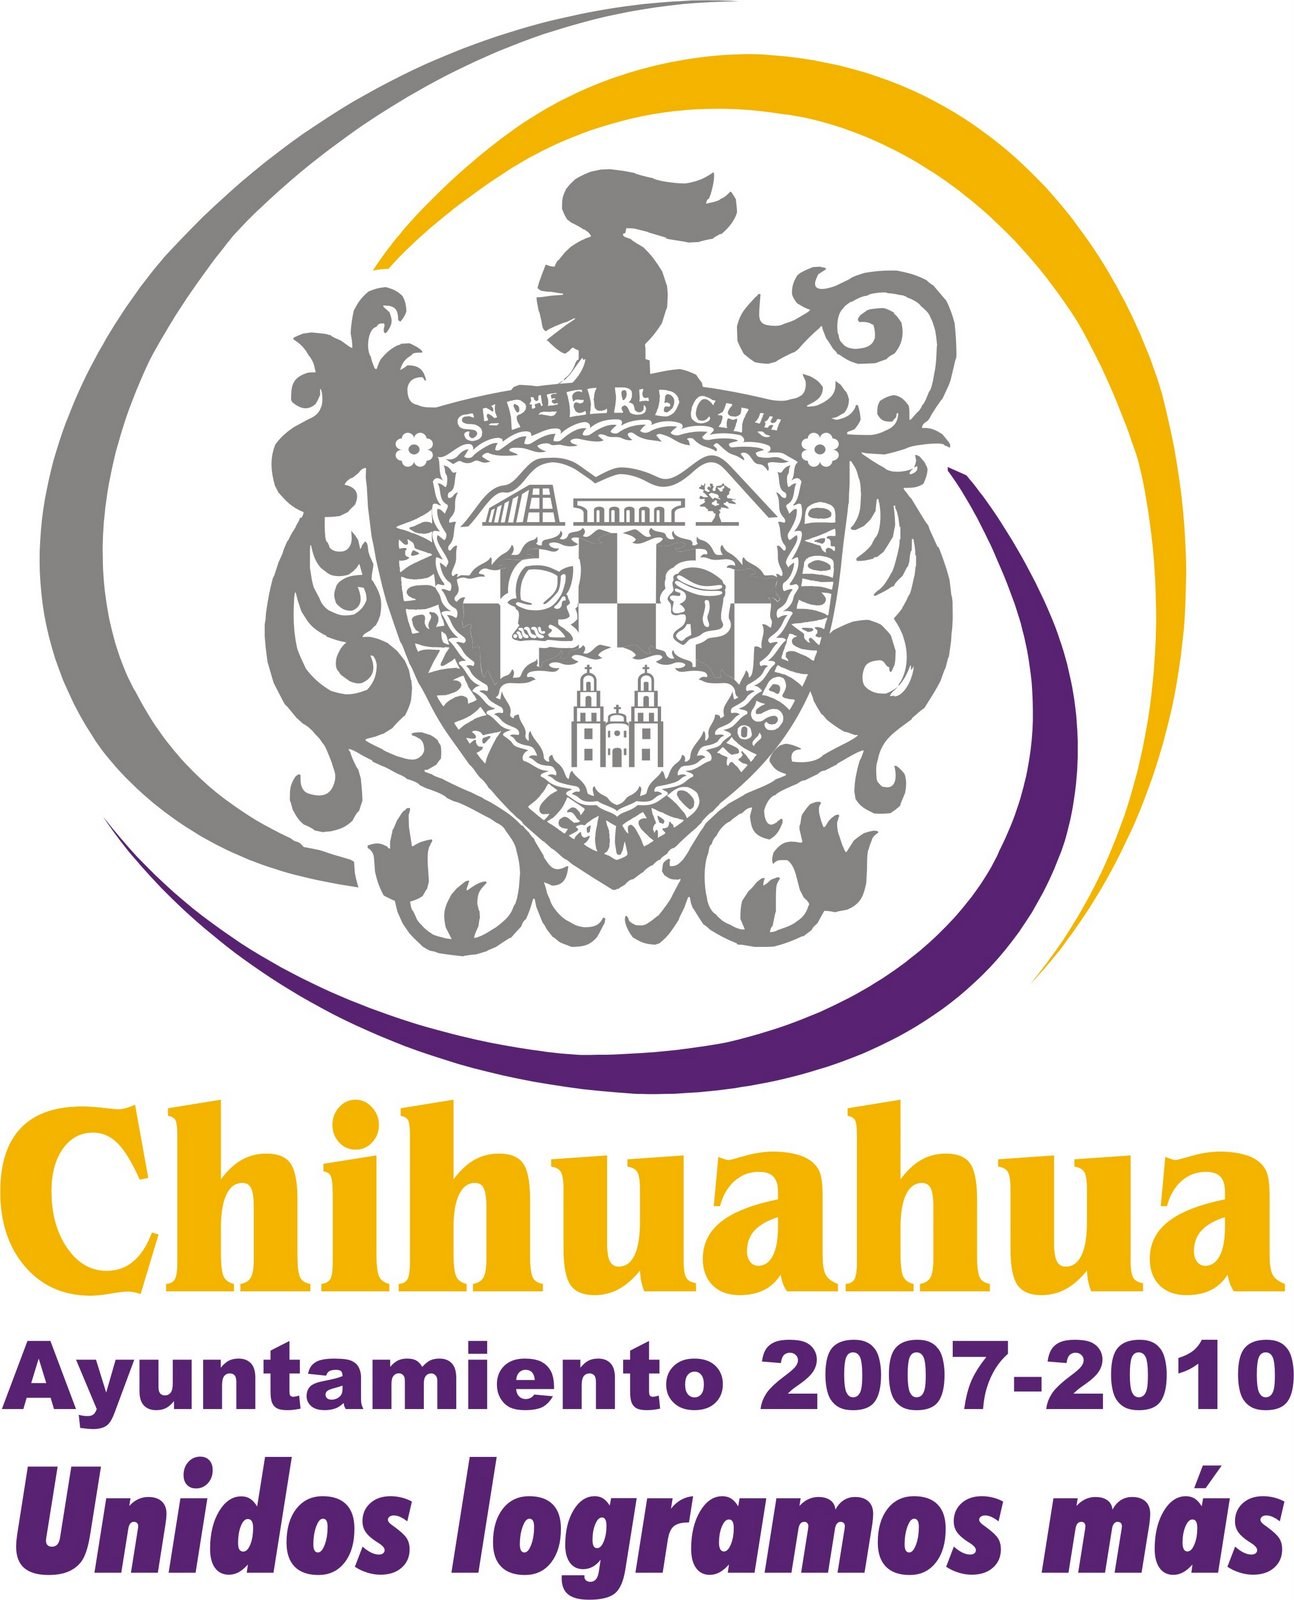 Chihuahua - Ayuntamiento